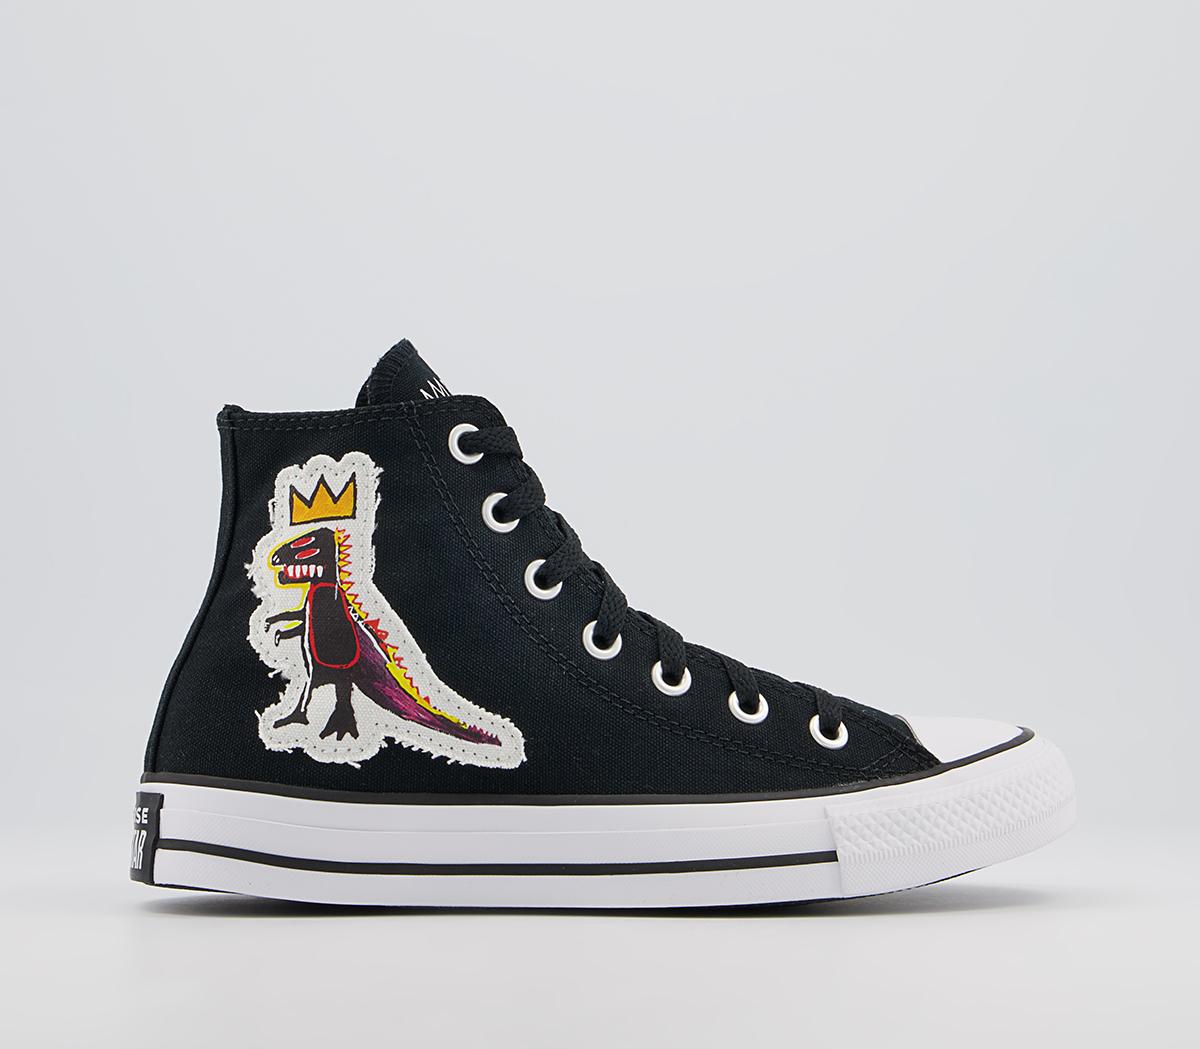 ConverseConverse All Star Hi TrainersJean Michel Basquiat Pez Dispenser